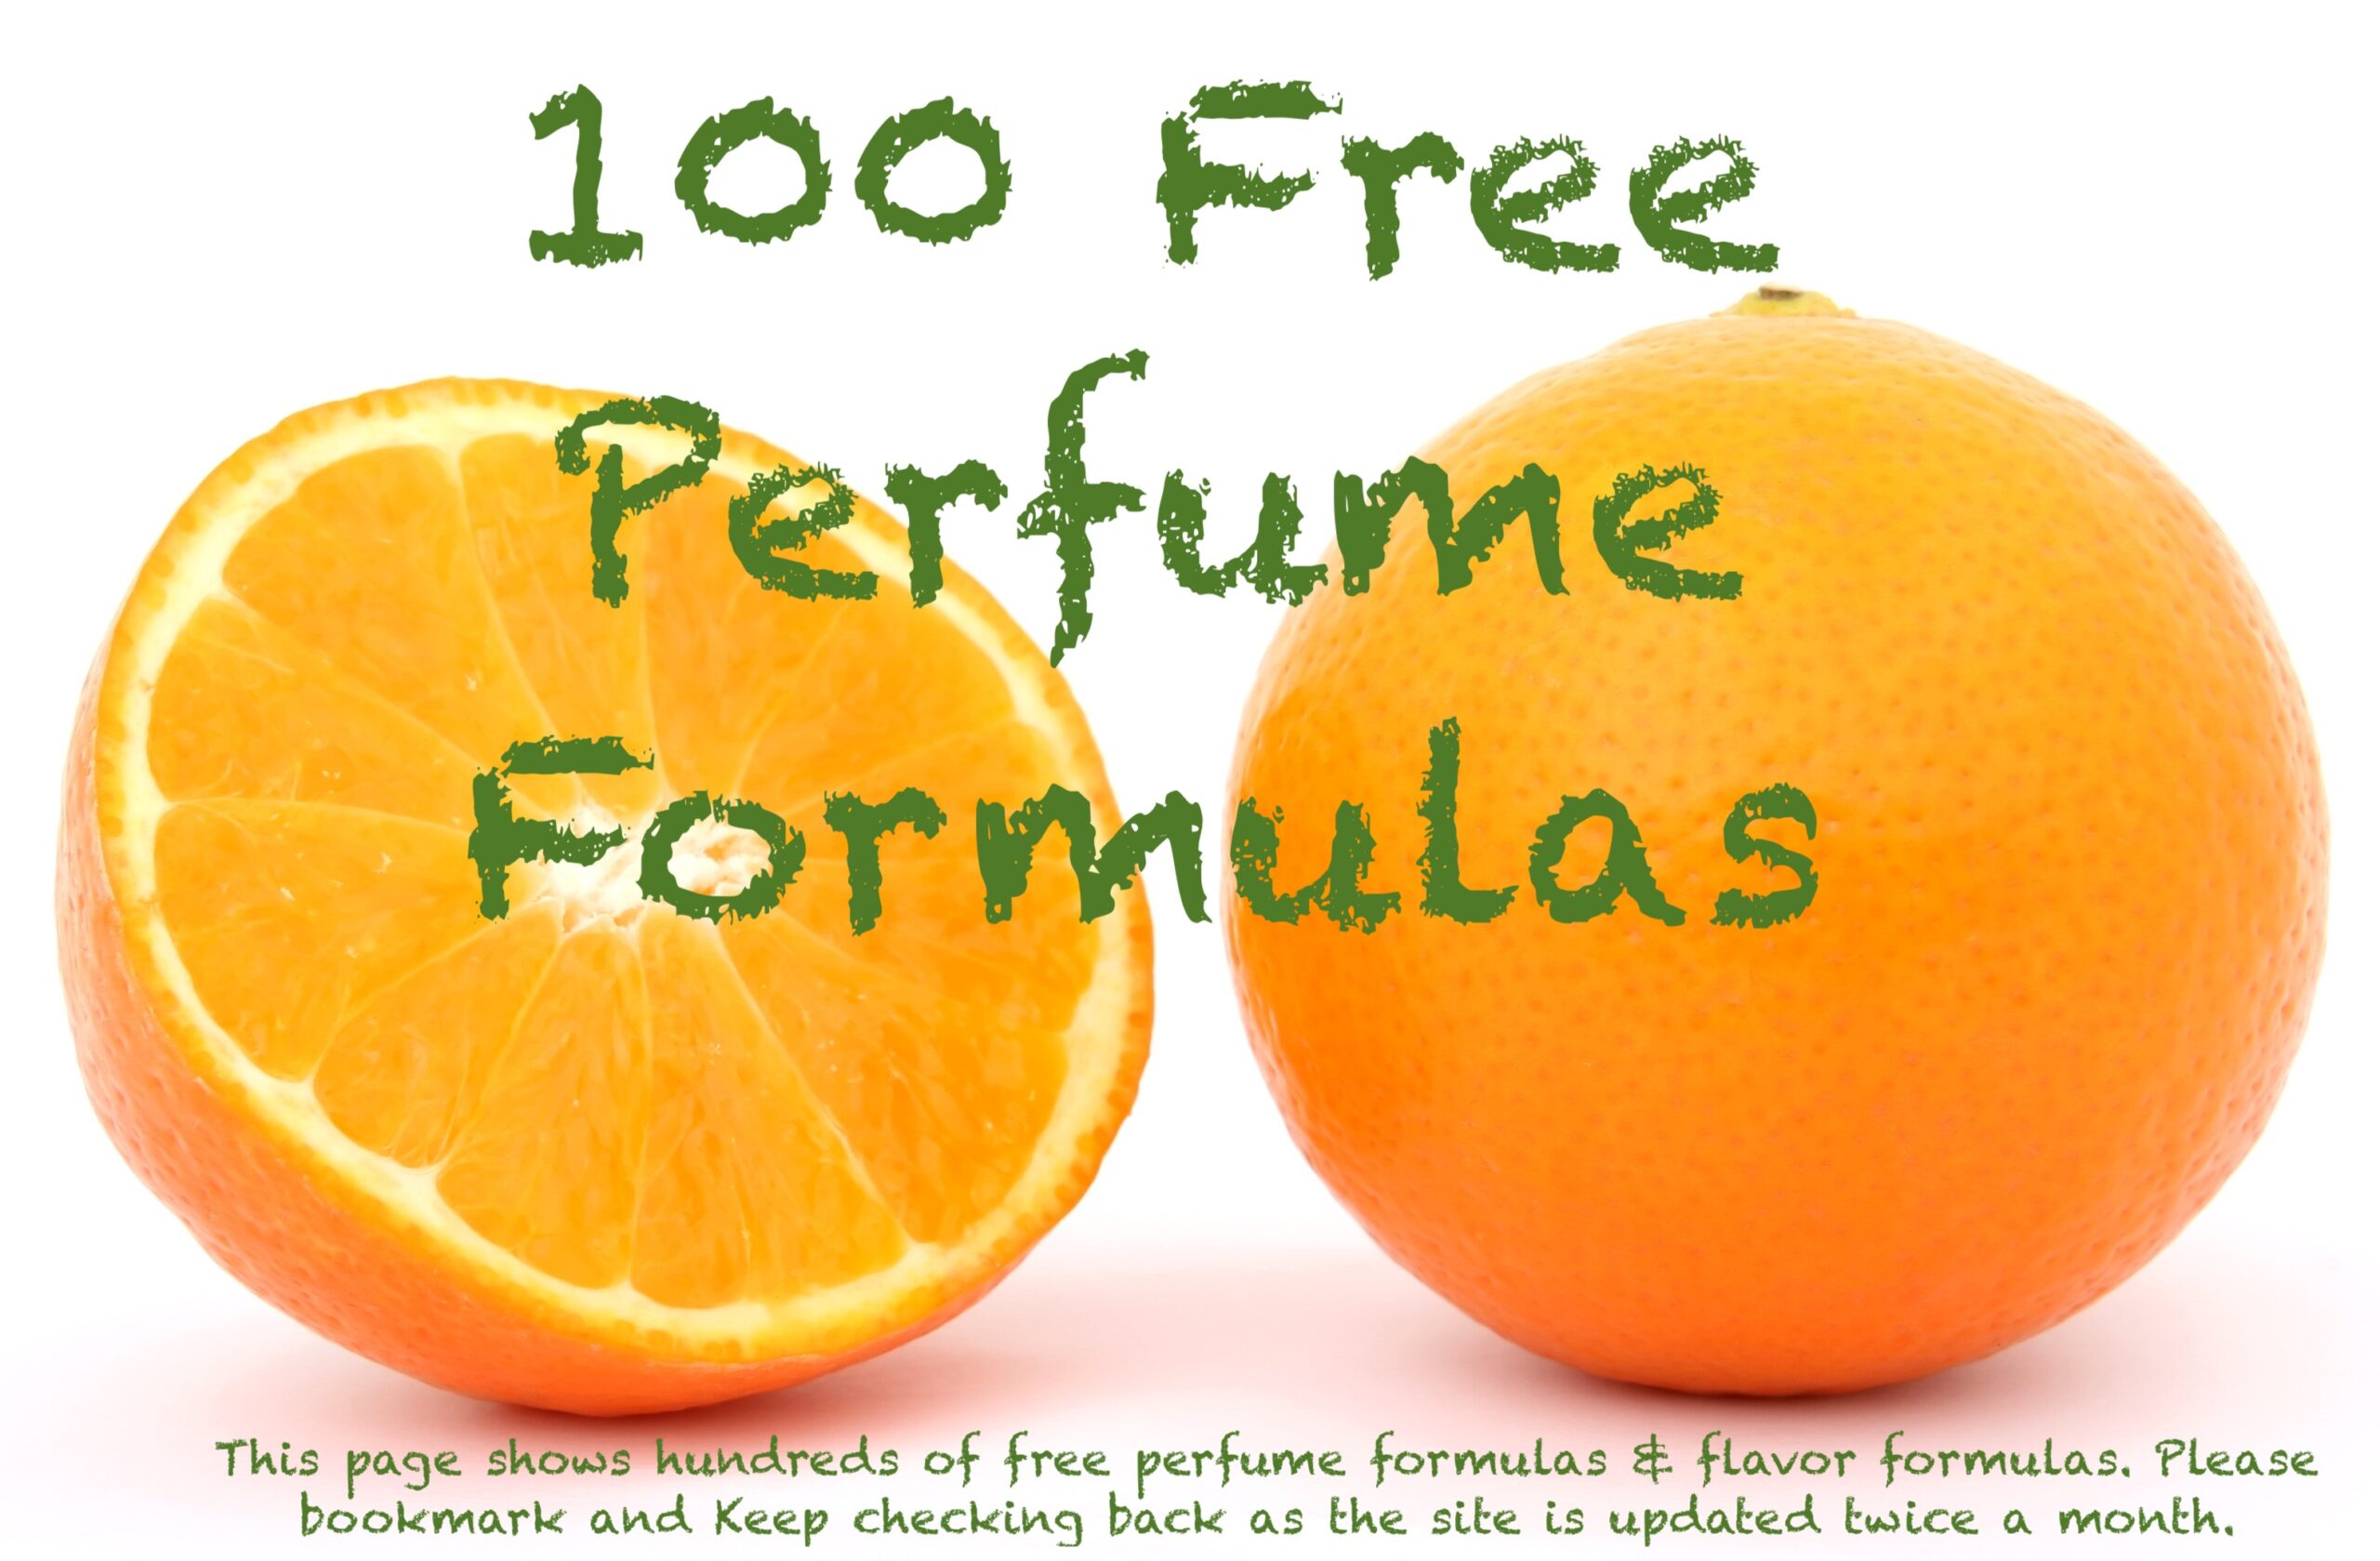 This page shows 100 free fragrance formulas innosolinc.com